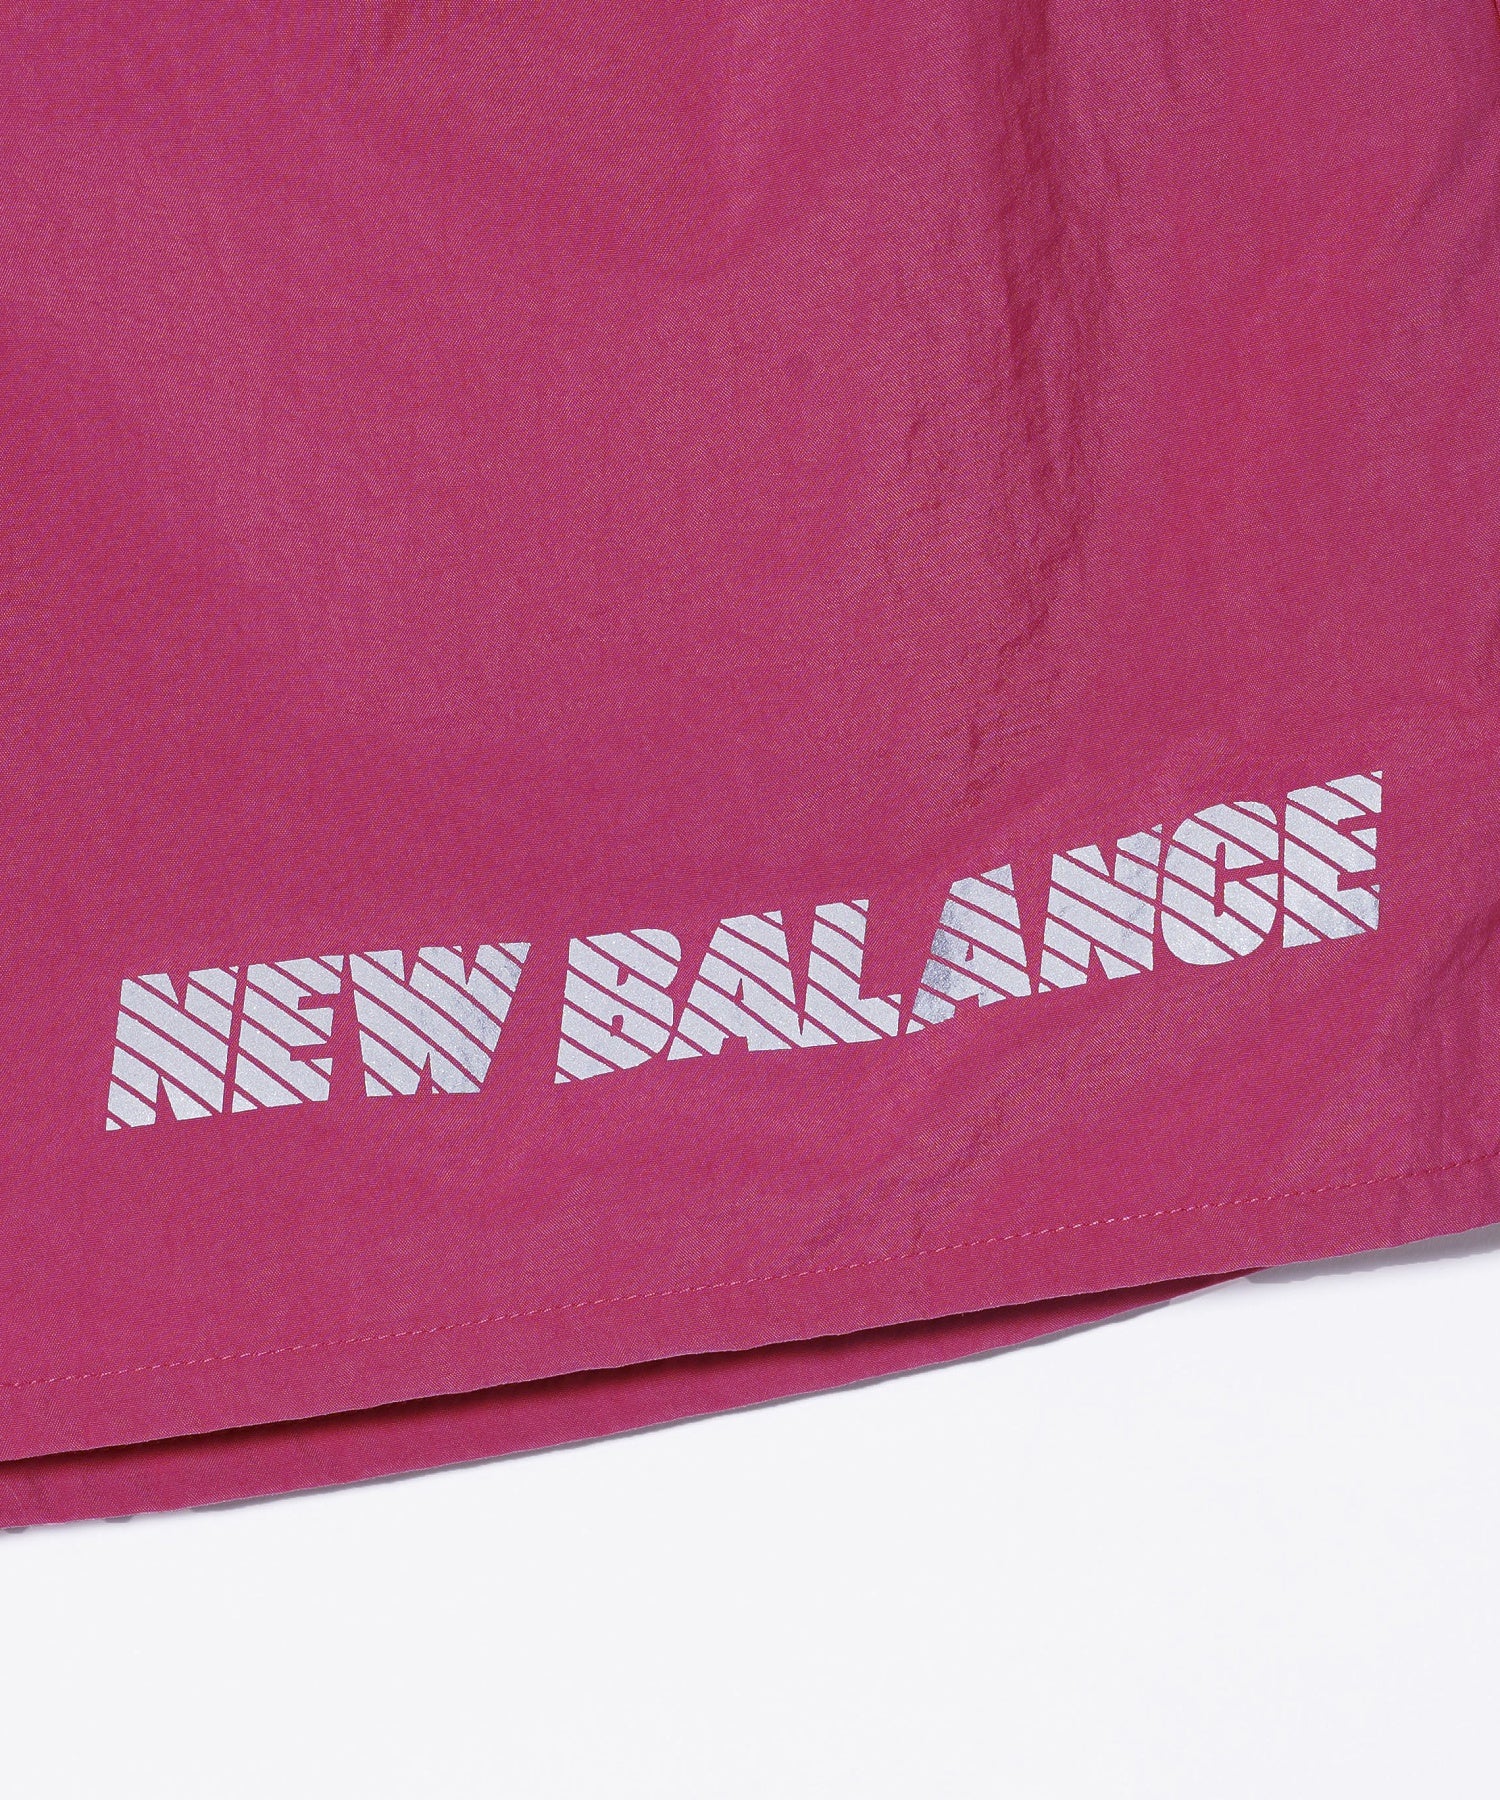 New Balance/ニューバランス/MET24 Reflection NB Shorts/AMS45000